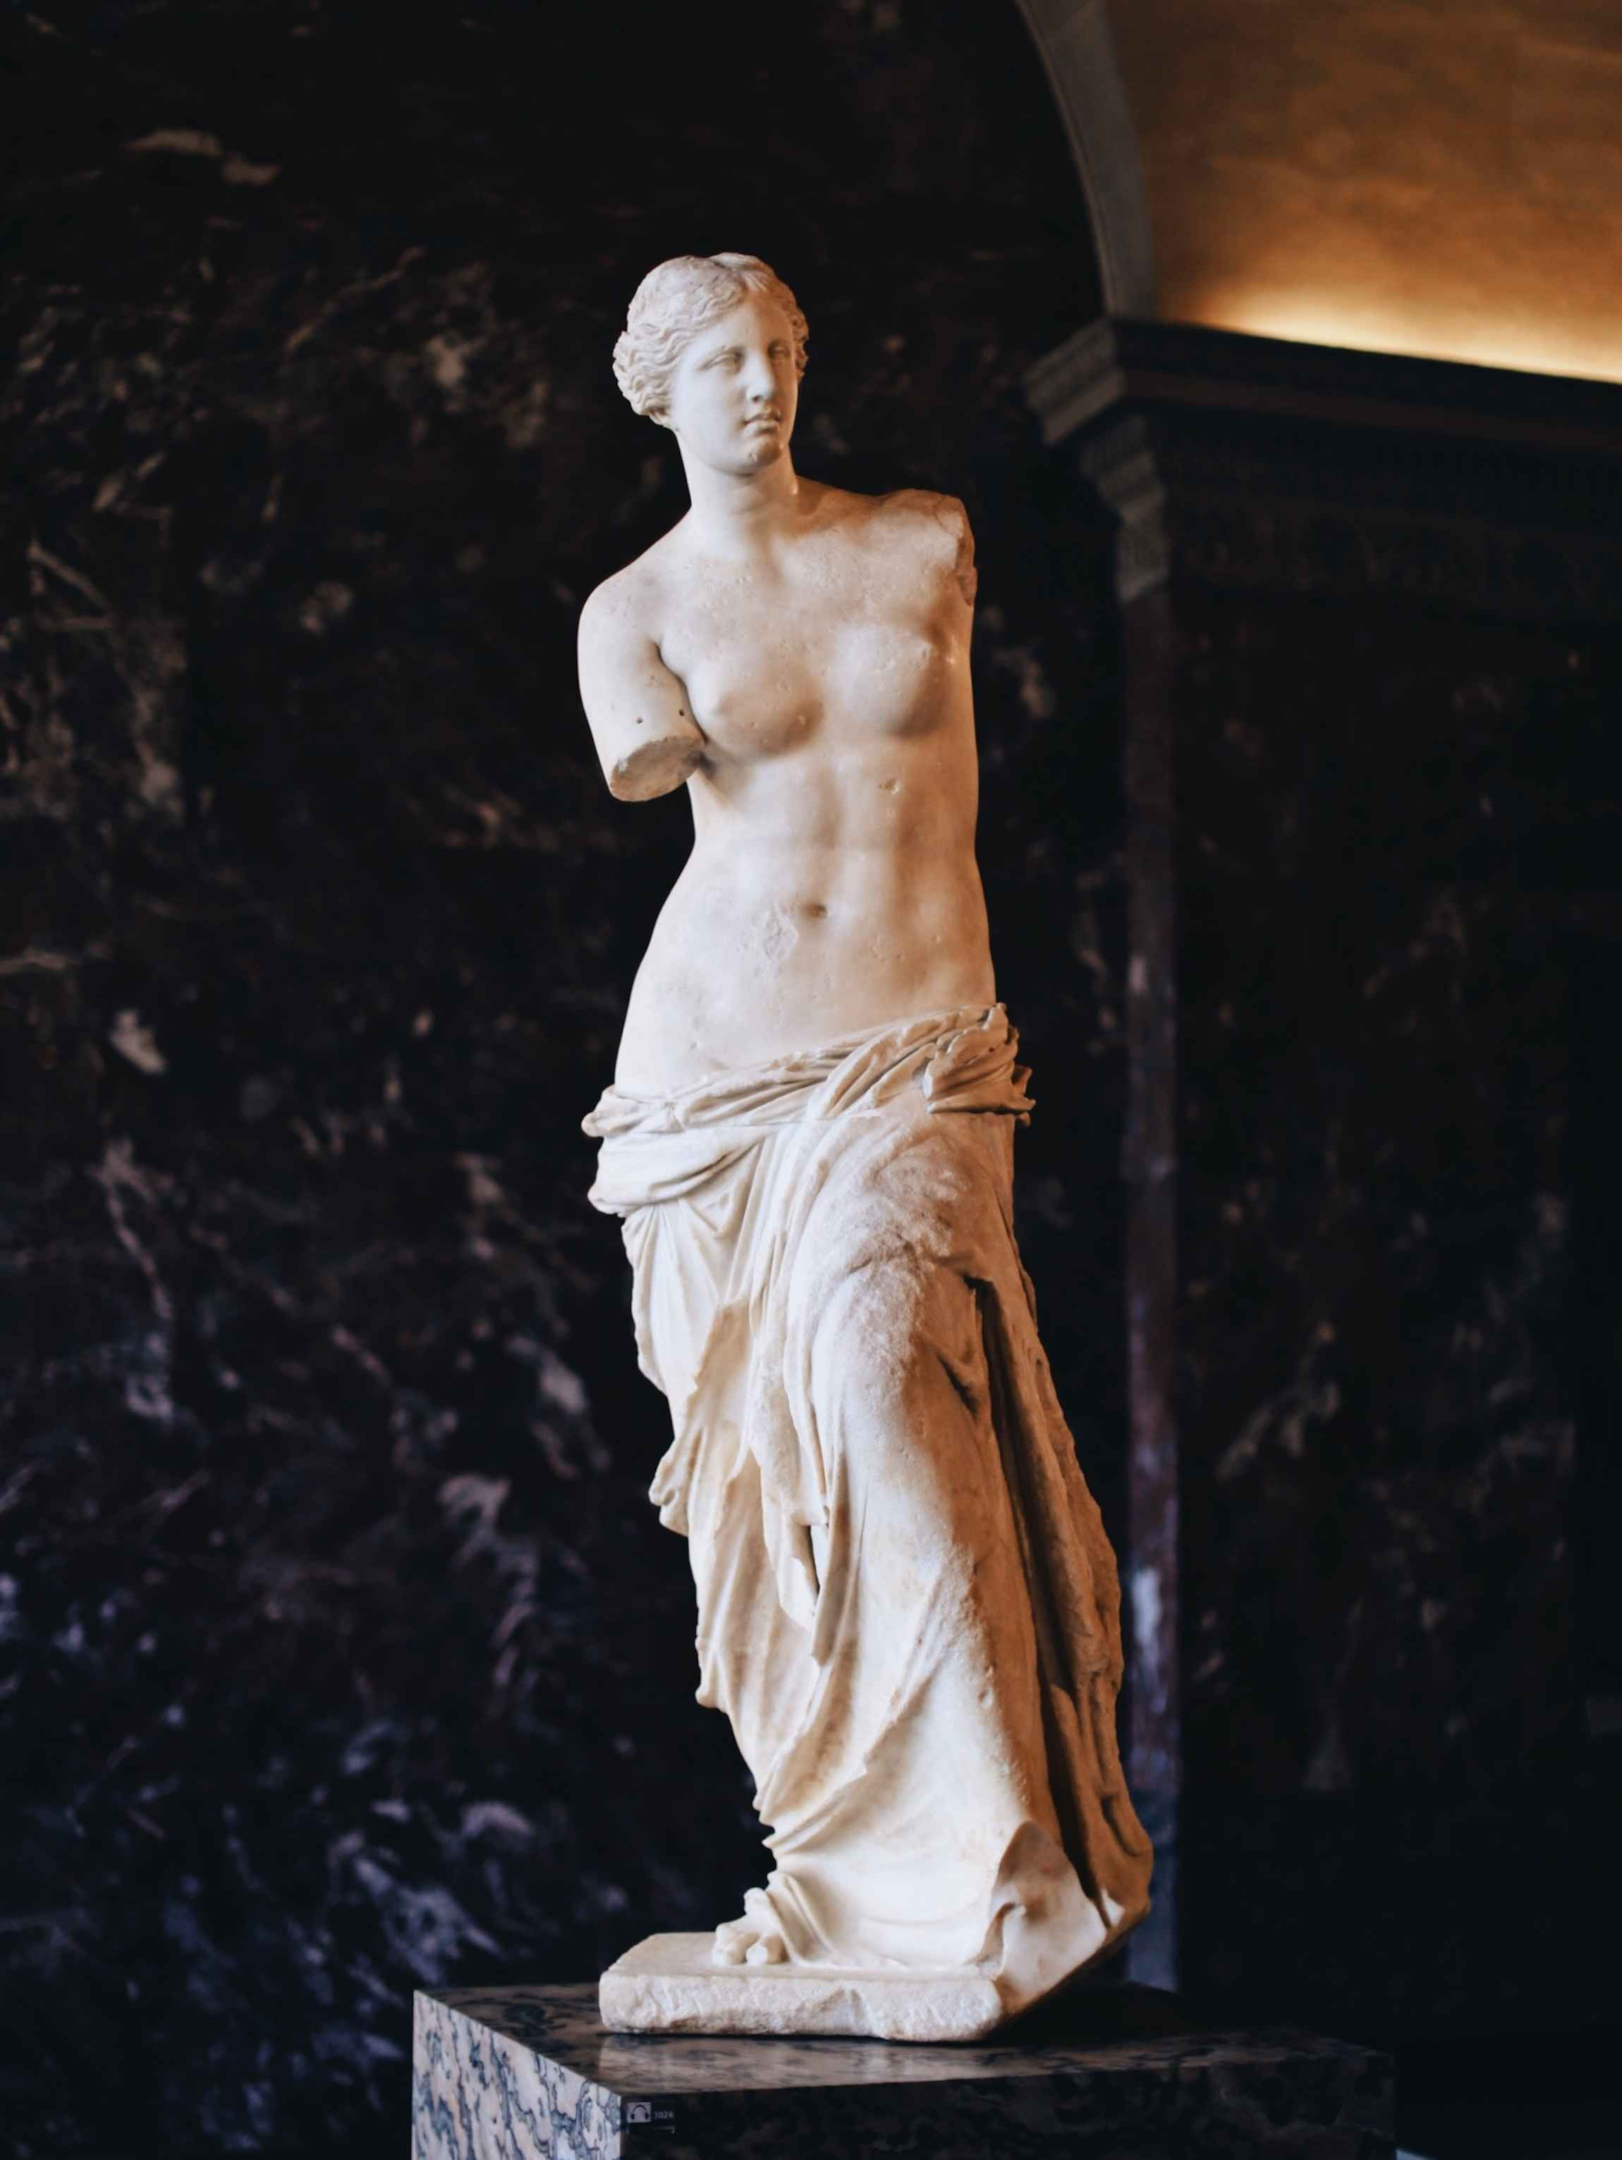 Venus de Milo (c. 130 BCE) by Alexandros of Antioch | Photo from Unsplash